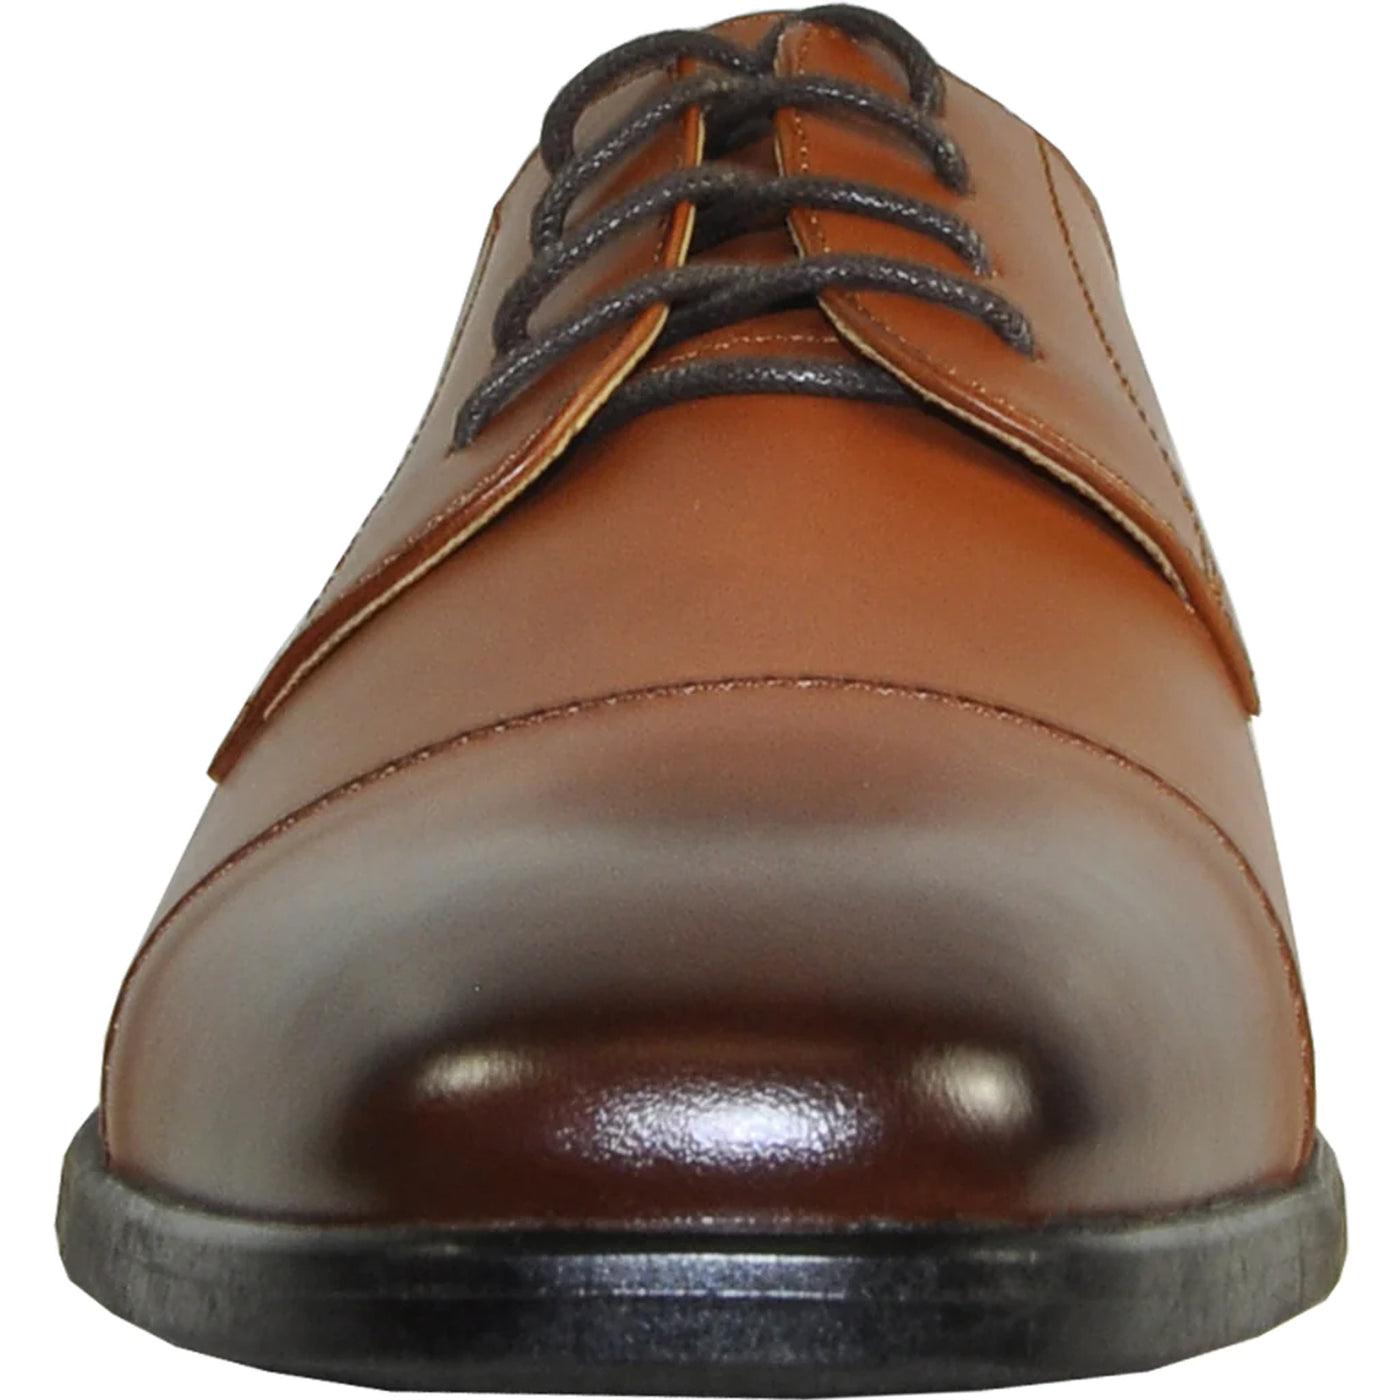 Mens Vintage Style Oxford Cap Toe Dress Shoe in Antique Brown